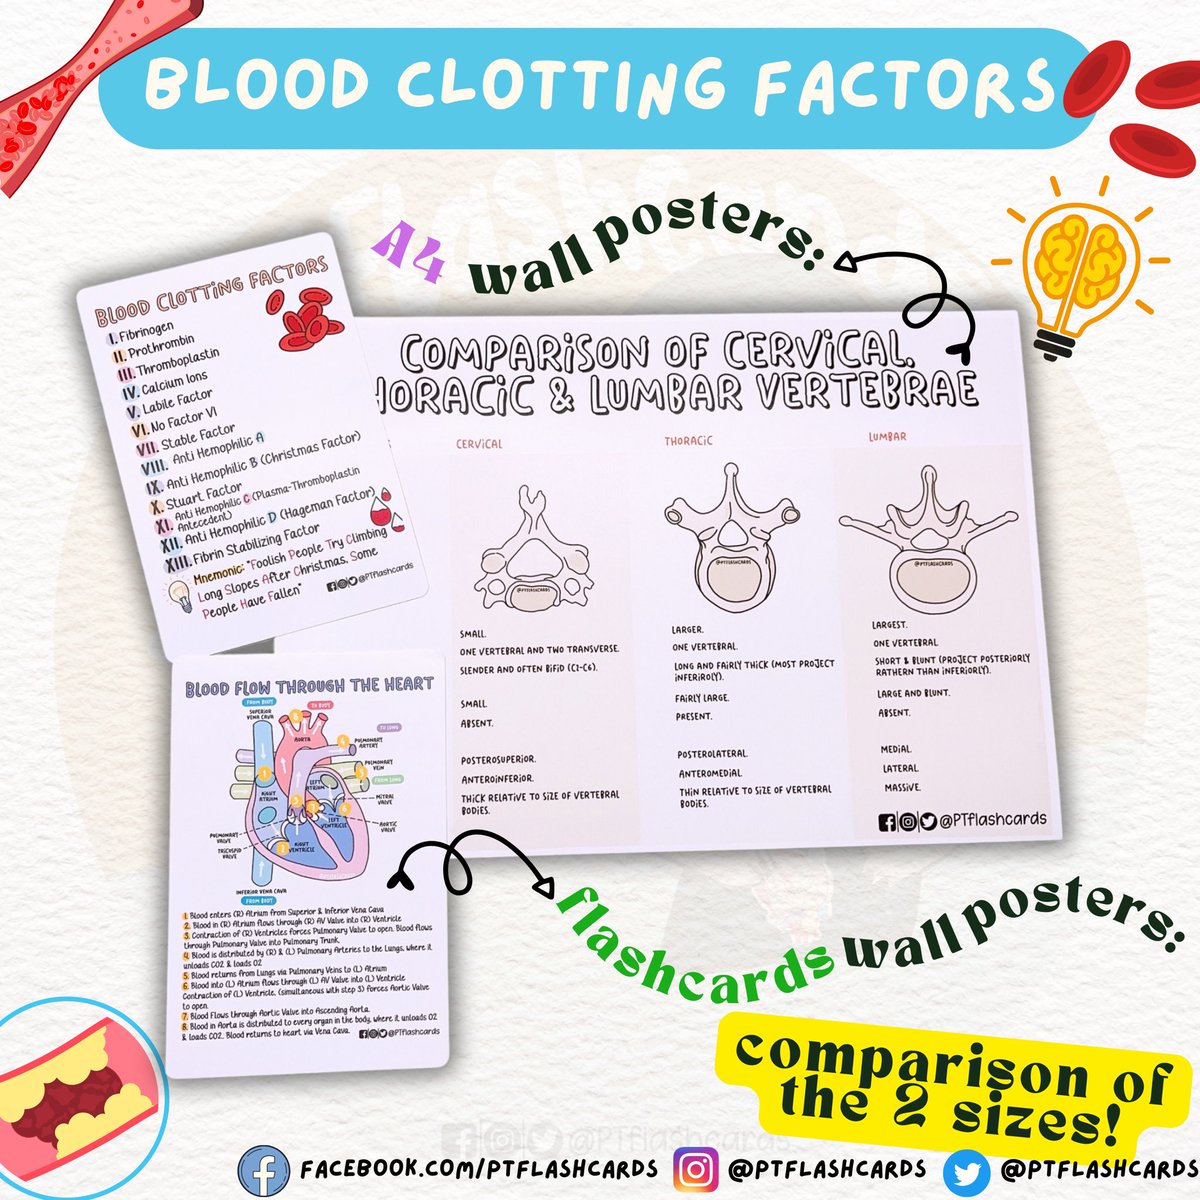 BLOOD CLOTTING FACTORS 💡

Contents: Please Swipe LEFT for more 📲

#Anatomy #PhysicalTherapy #PTknows #MedicalFacts #Studygram #PTreviews #Medicine #Coagulation #Bloodclottingfactors